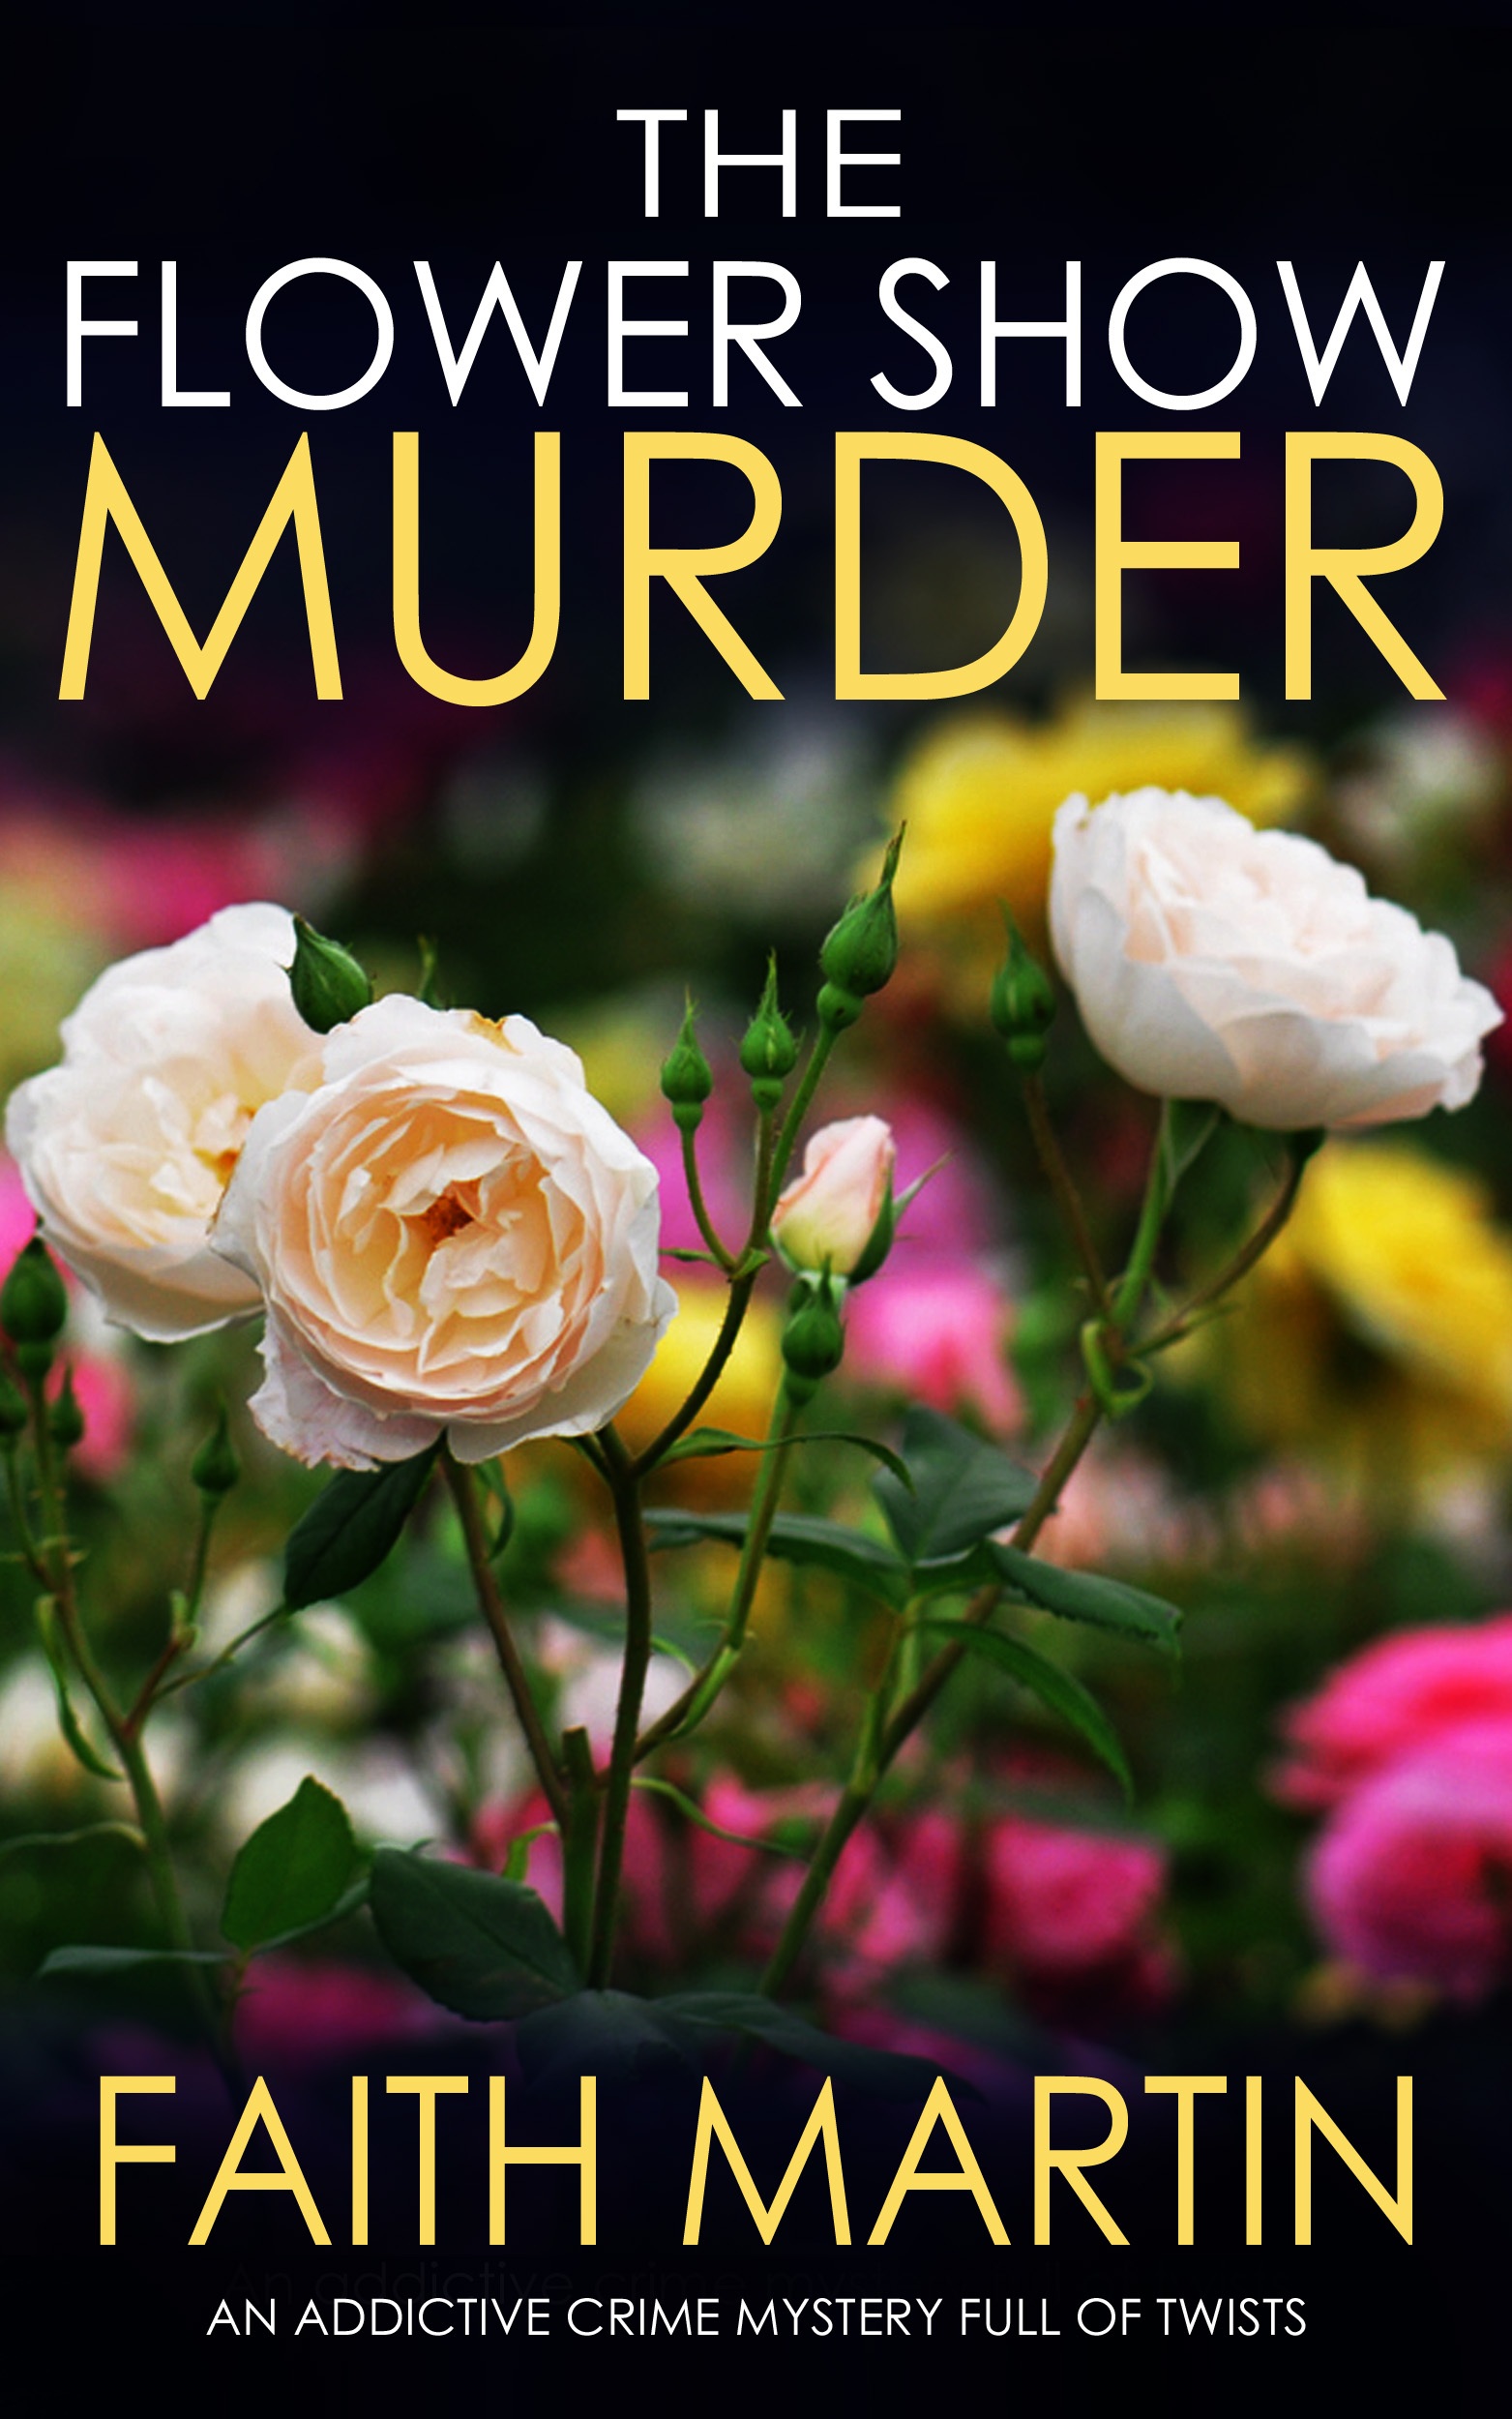 THE FLOWER SHOW MURDER.jpg